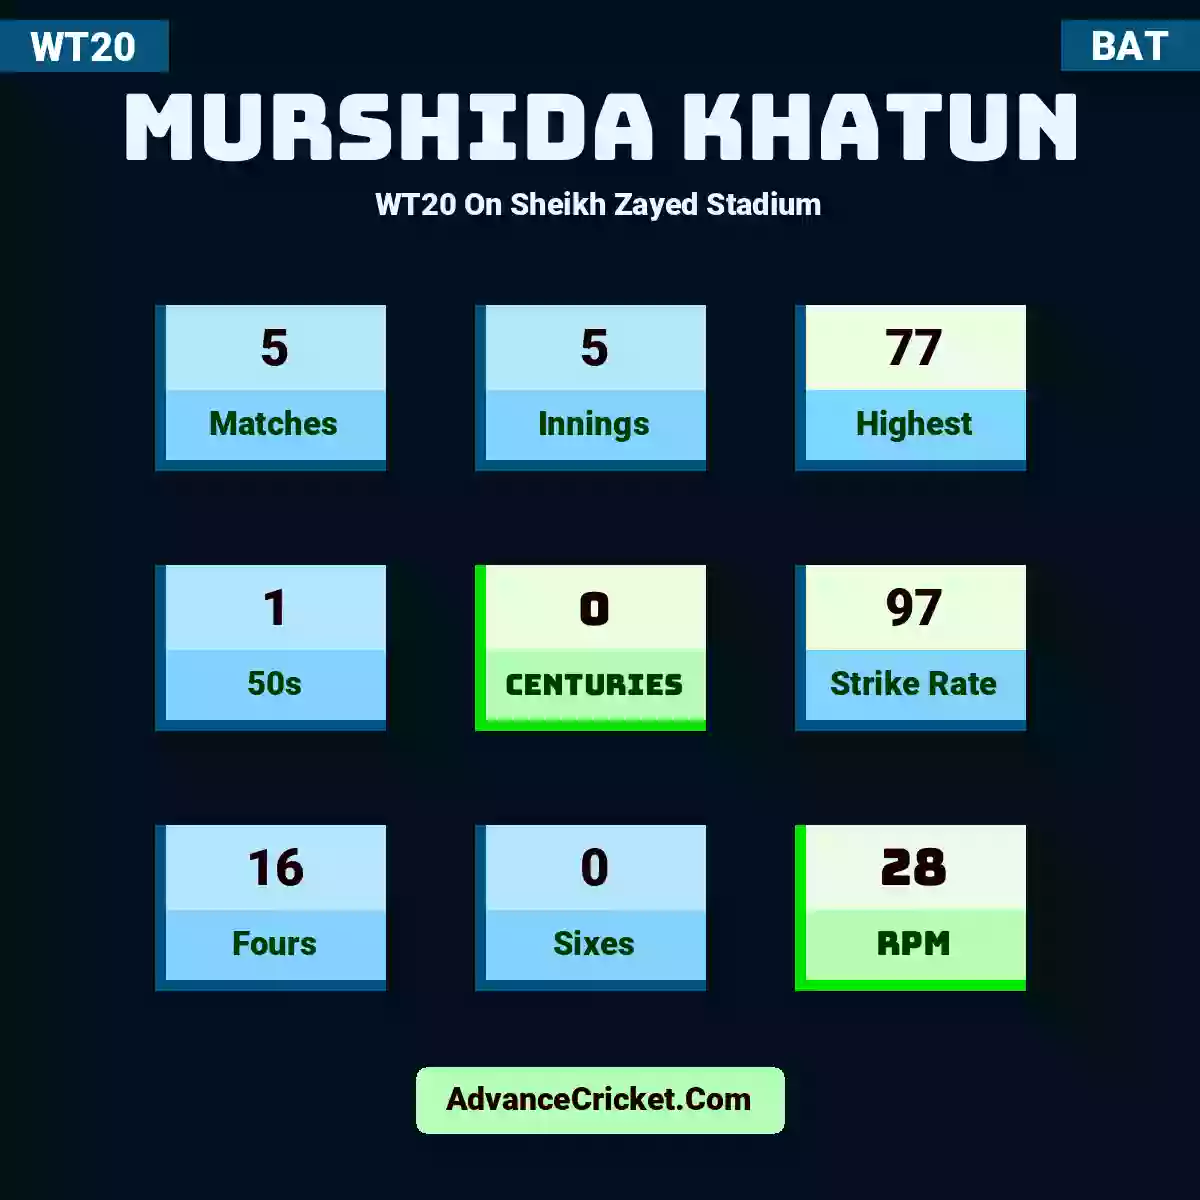 Murshida Khatun WT20  On Sheikh Zayed Stadium, Murshida Khatun played 5 matches, scored 77 runs as highest, 1 half-centuries, and 0 centuries, with a strike rate of 97. M.Khatun hit 16 fours and 0 sixes, with an RPM of 28.